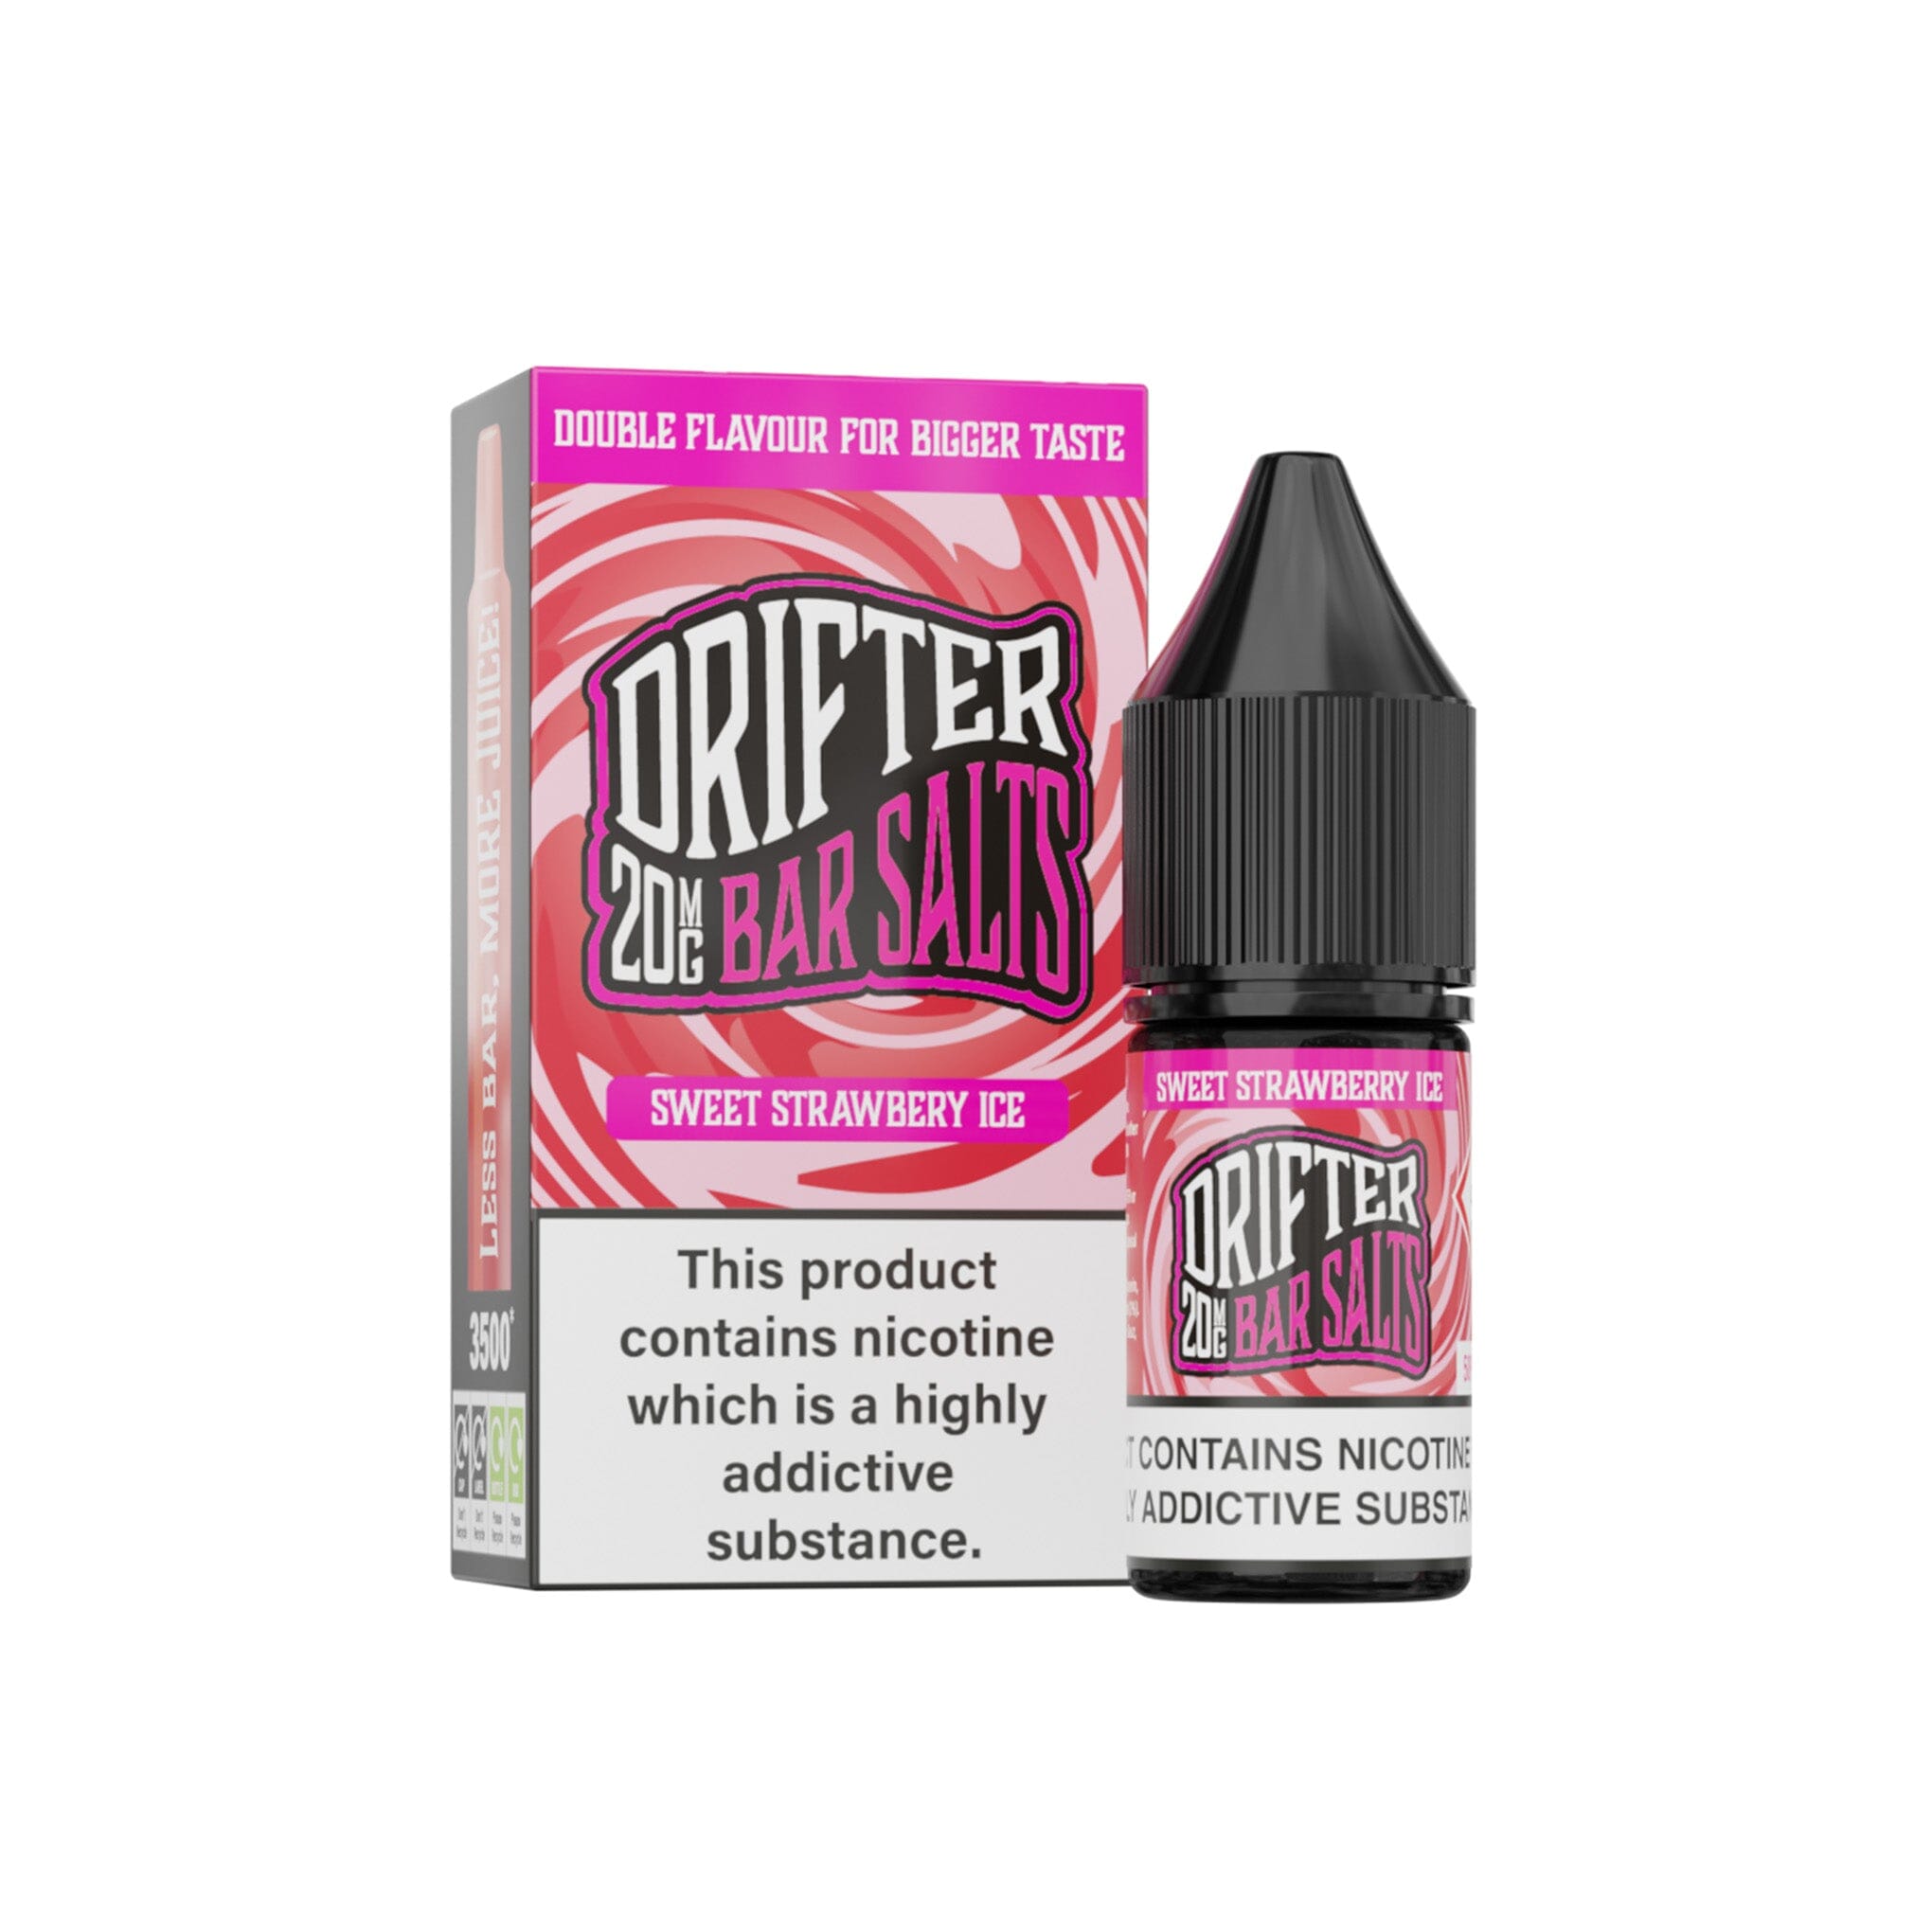 Drifter Bar Salt E-Liquid Sweet Strawberry Ice 20MG - High Nicotine 